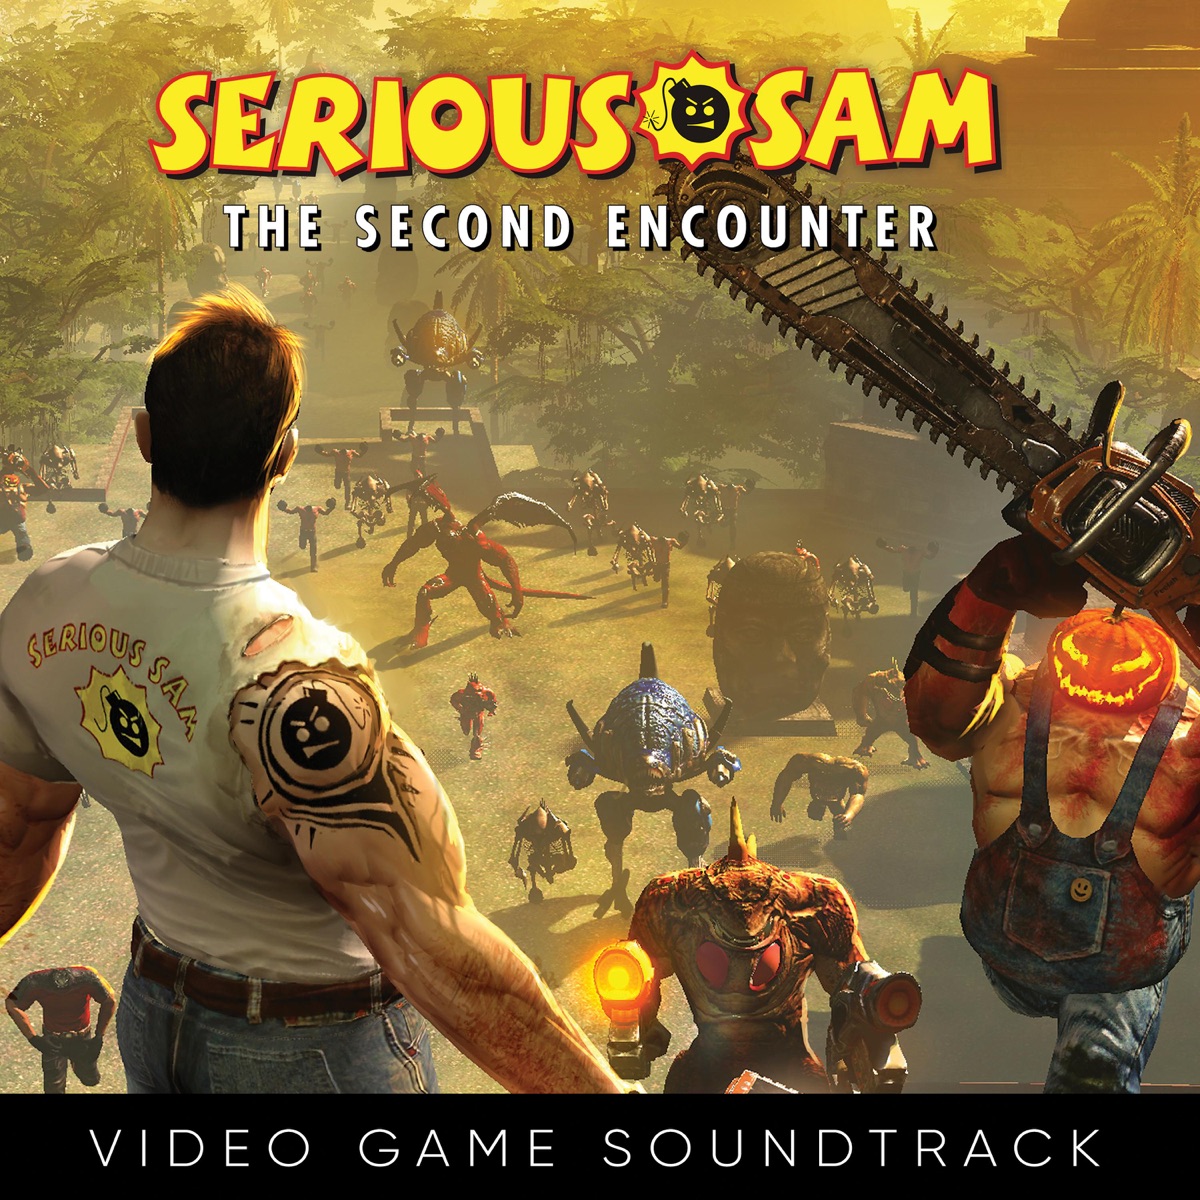 Serious Sam: The Second Encounter (Video Game Soundtrack) - Album by Damjan  Mravunac - Apple Music